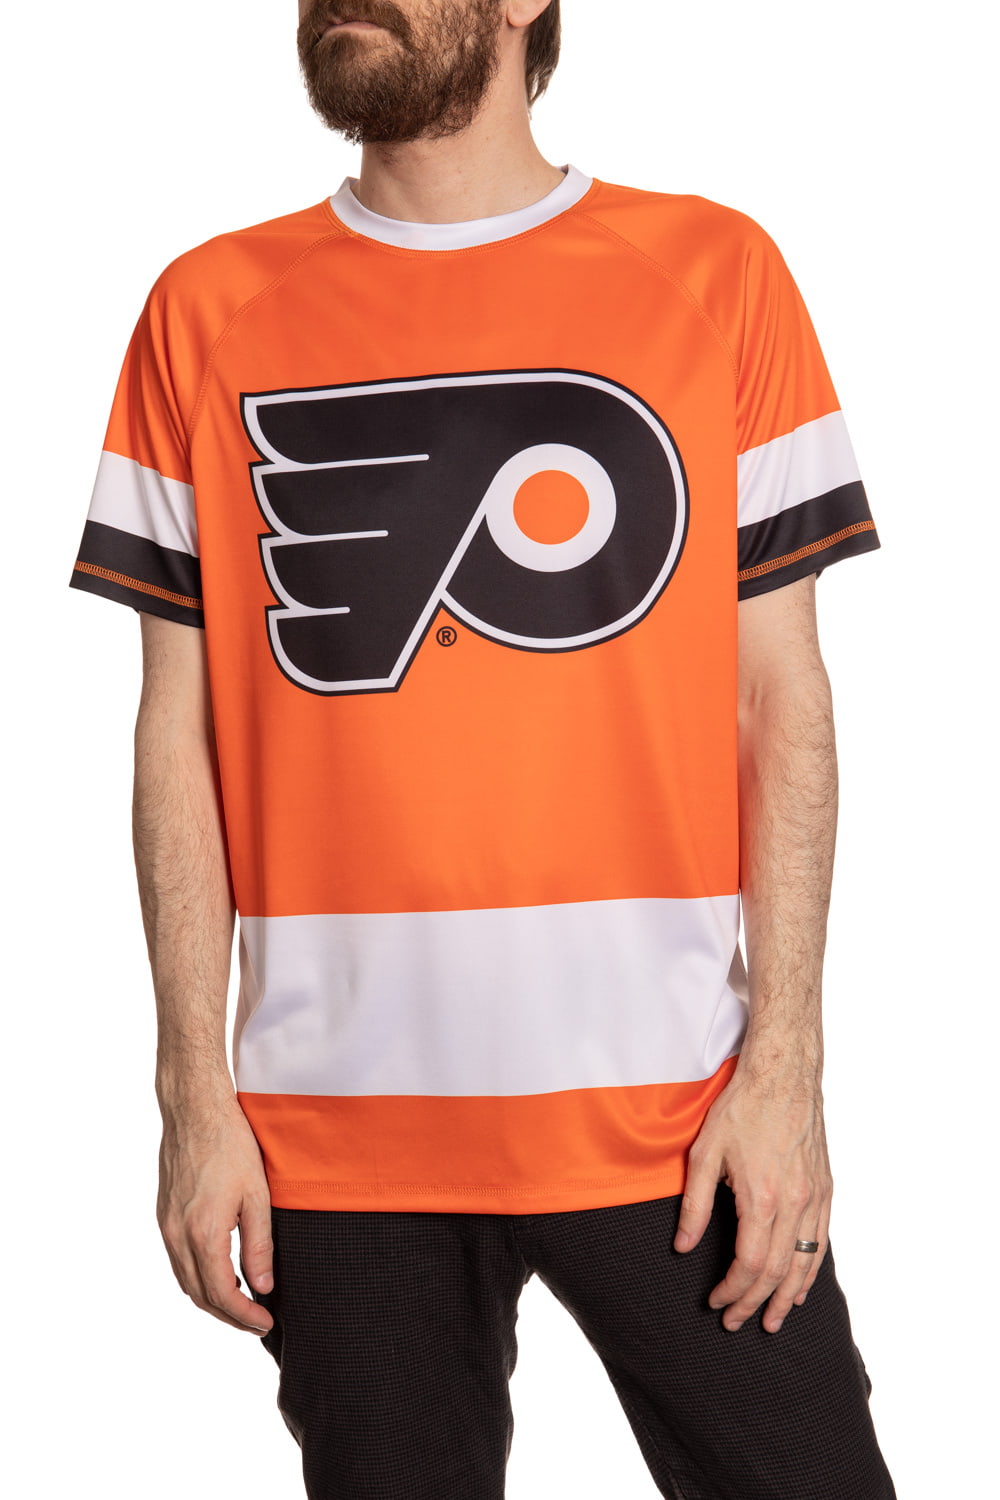 Philadelphia Flyers Short Sleeve Rashguard Front View. Orange Shirt With Black and White Accents.